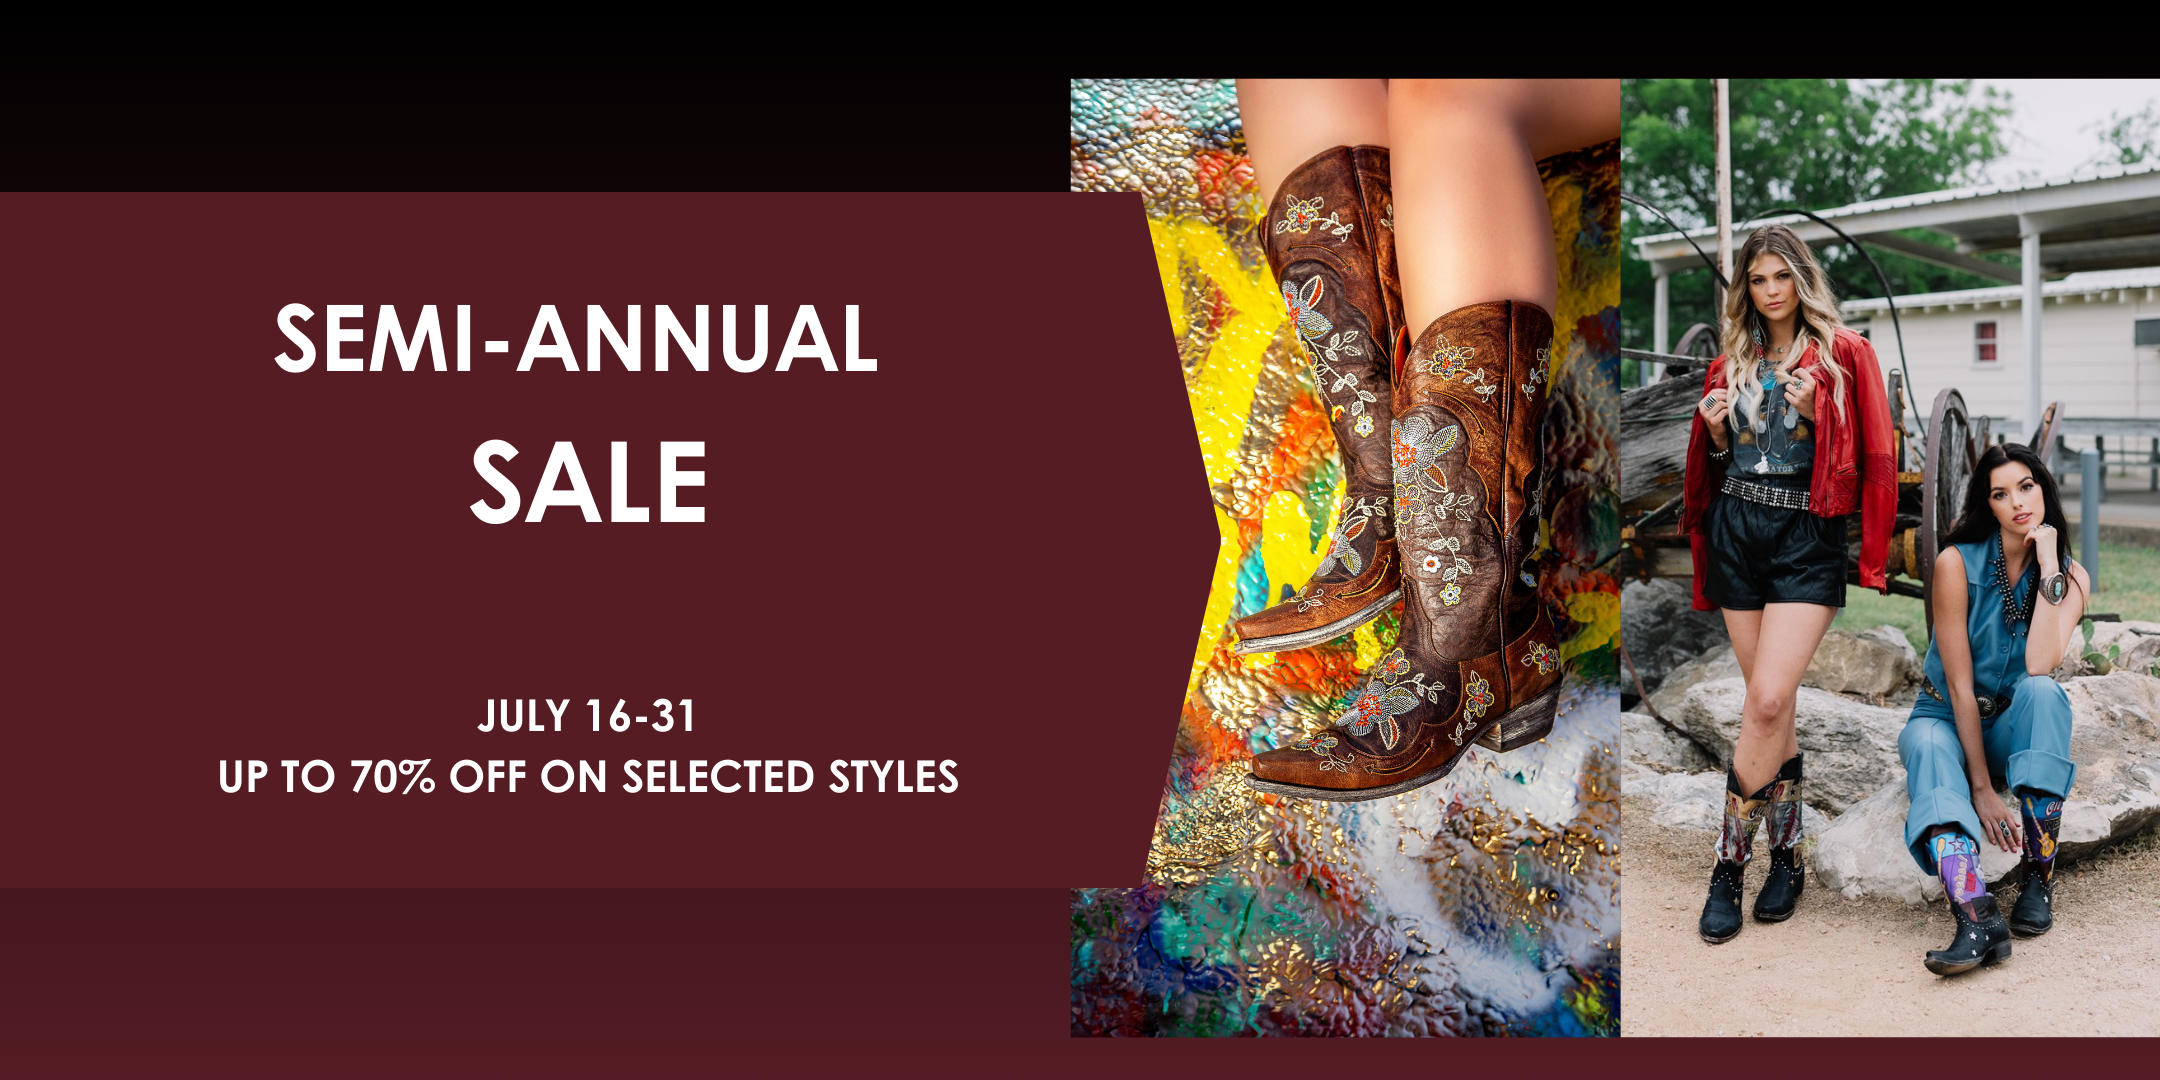 Semi annual sale july 16-31